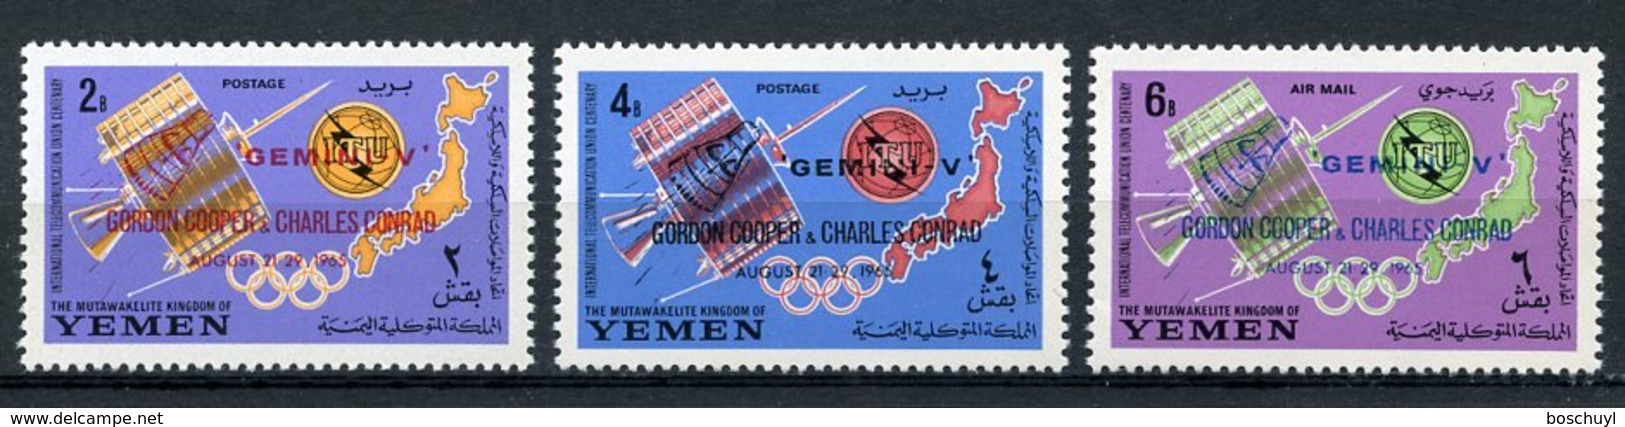 Yemen Kingdom, 1965, ITU, United Nations, Space, Gemini Overprint, MNH, Michel 179-181A - Yémen